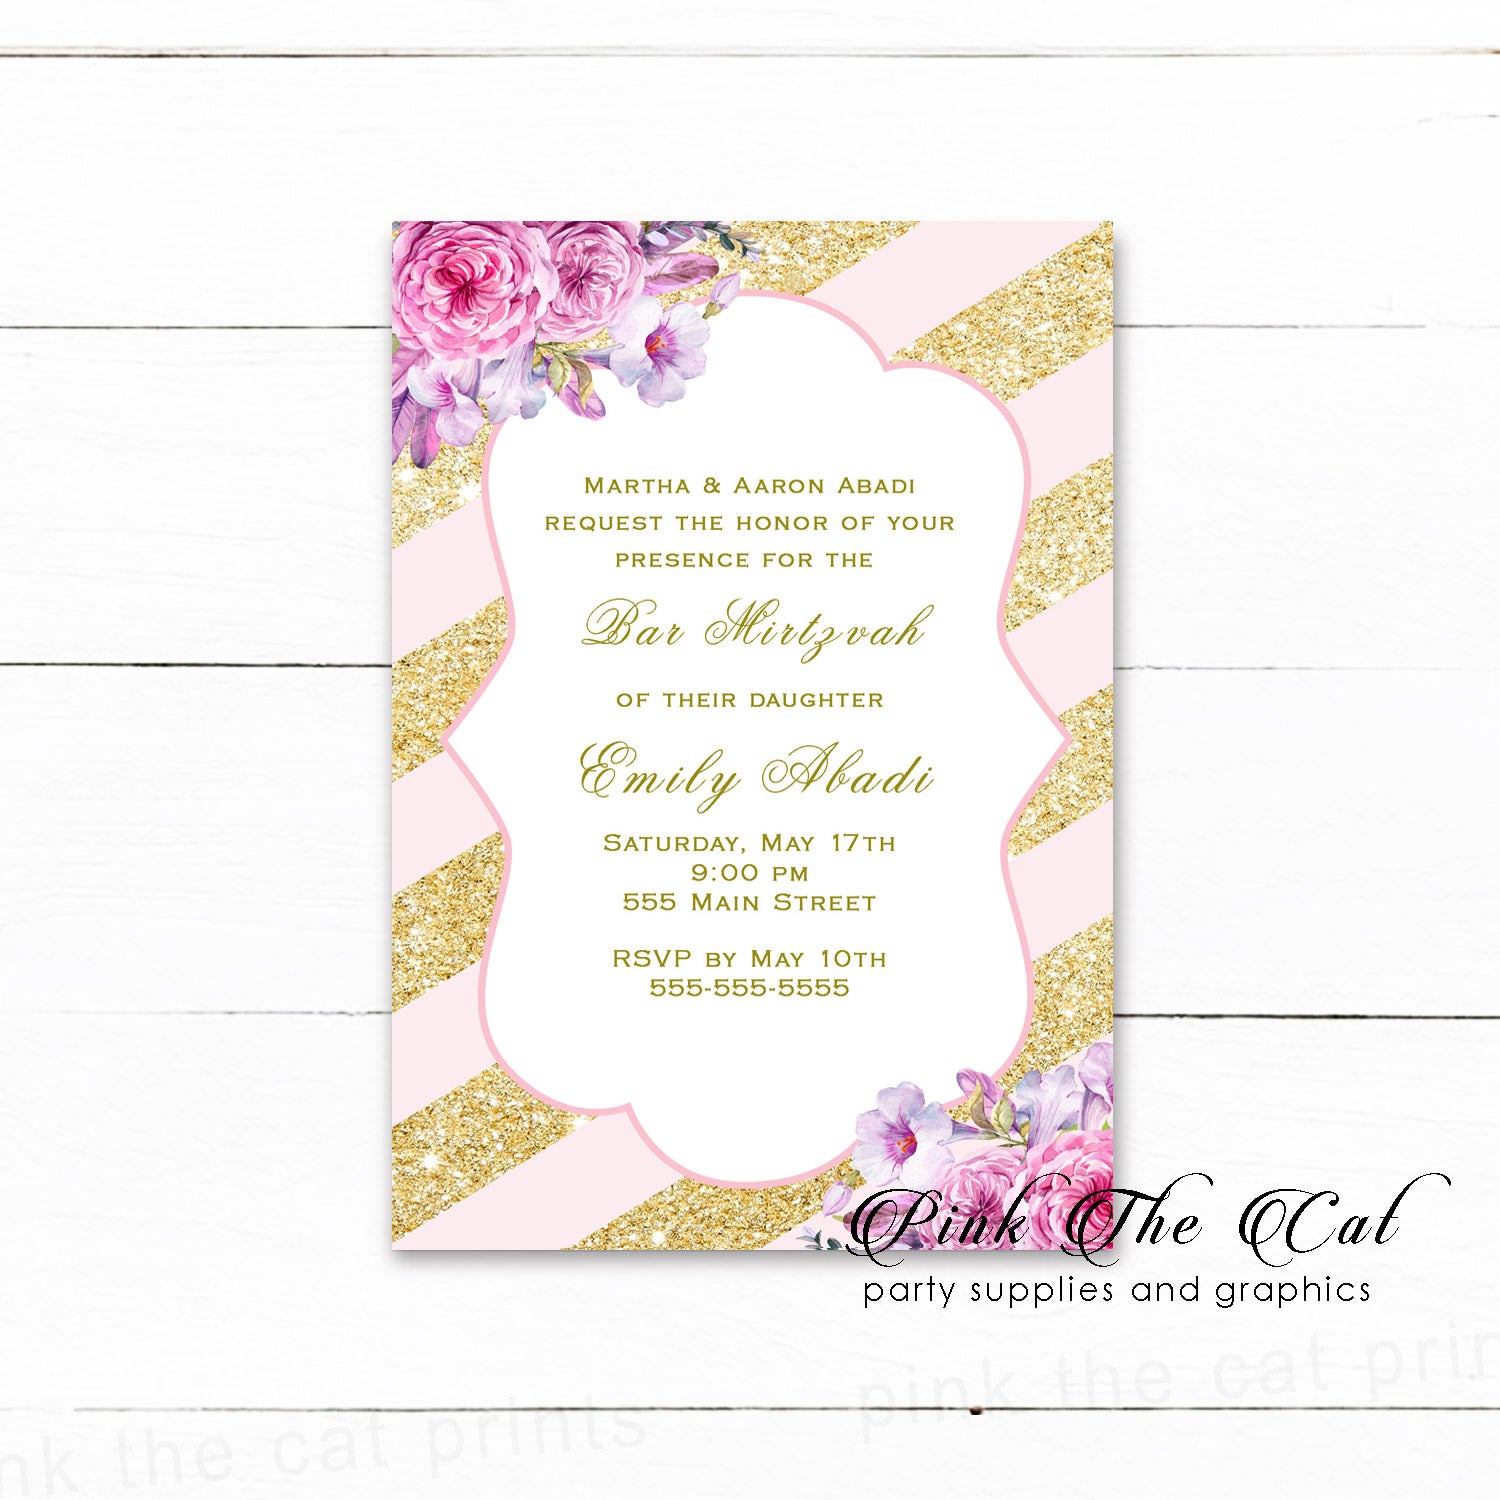 Bat mitzvah invitations birthday blush pink gold printable